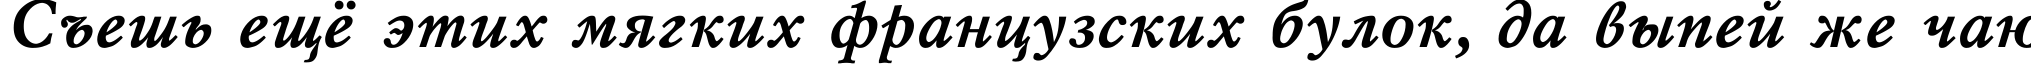 Пример написания шрифтом Mysl Bold Italic текста на русском